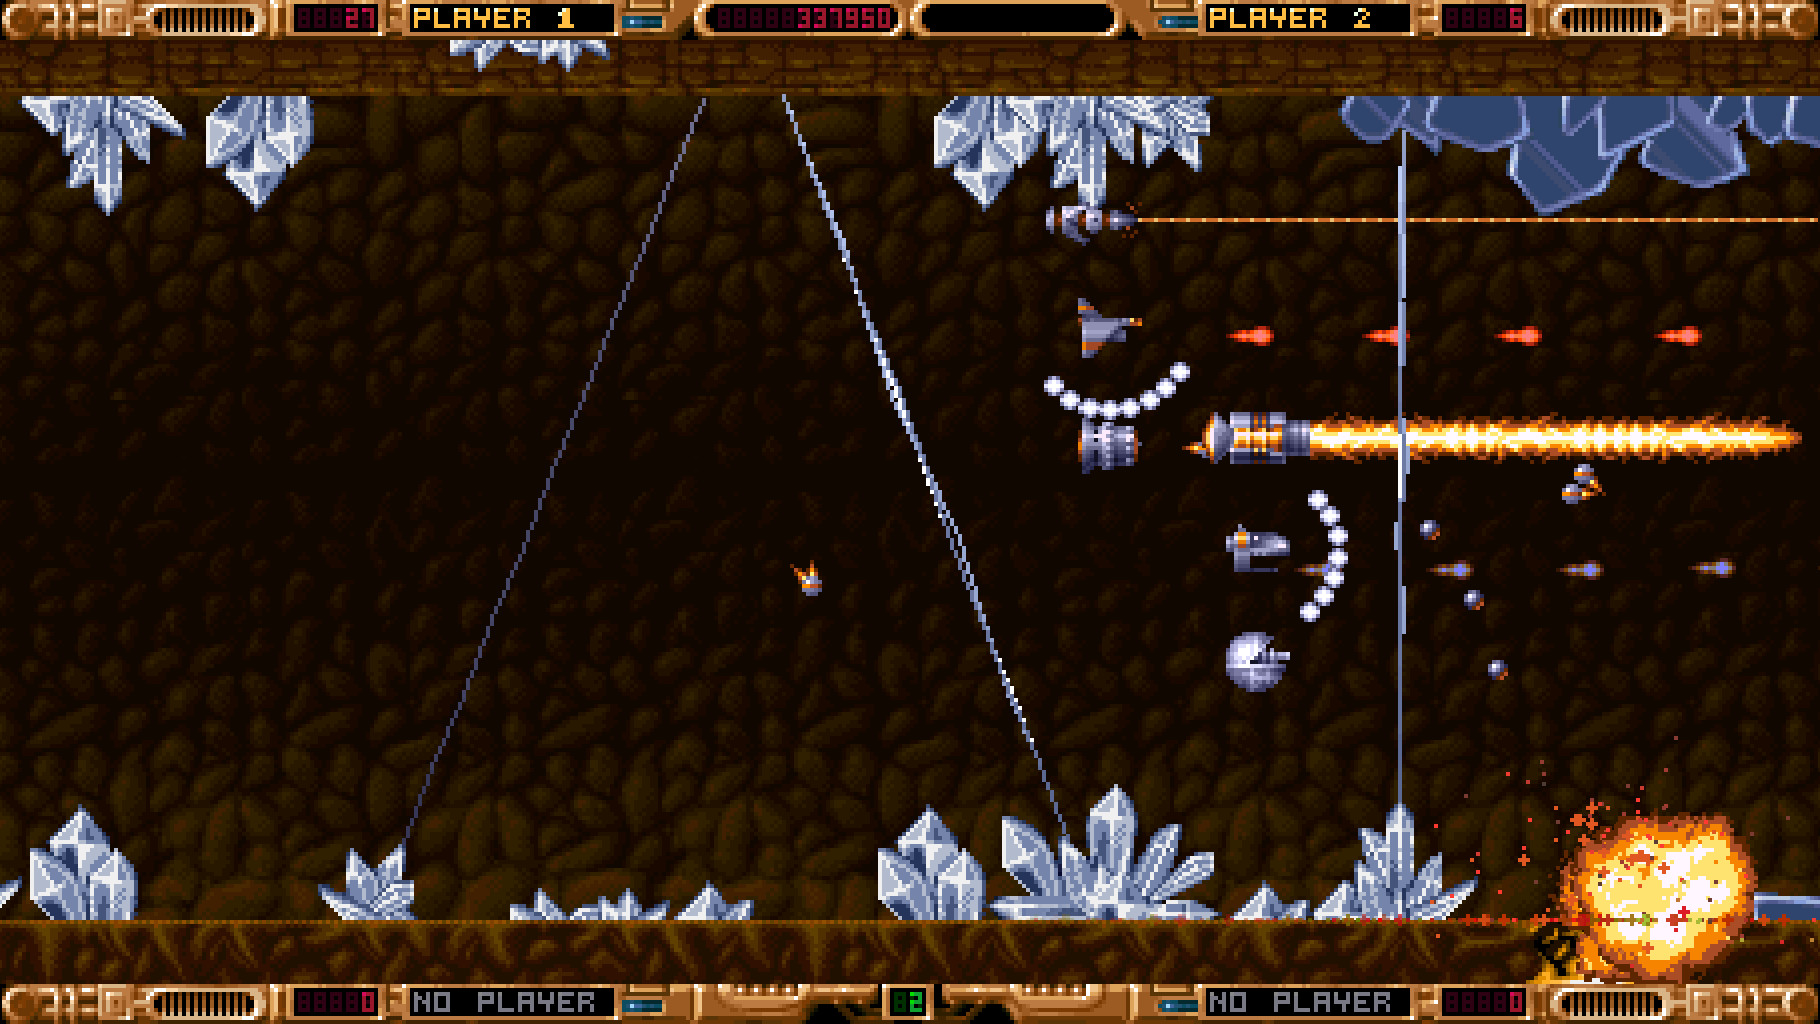 1993 Space Machine screenshot